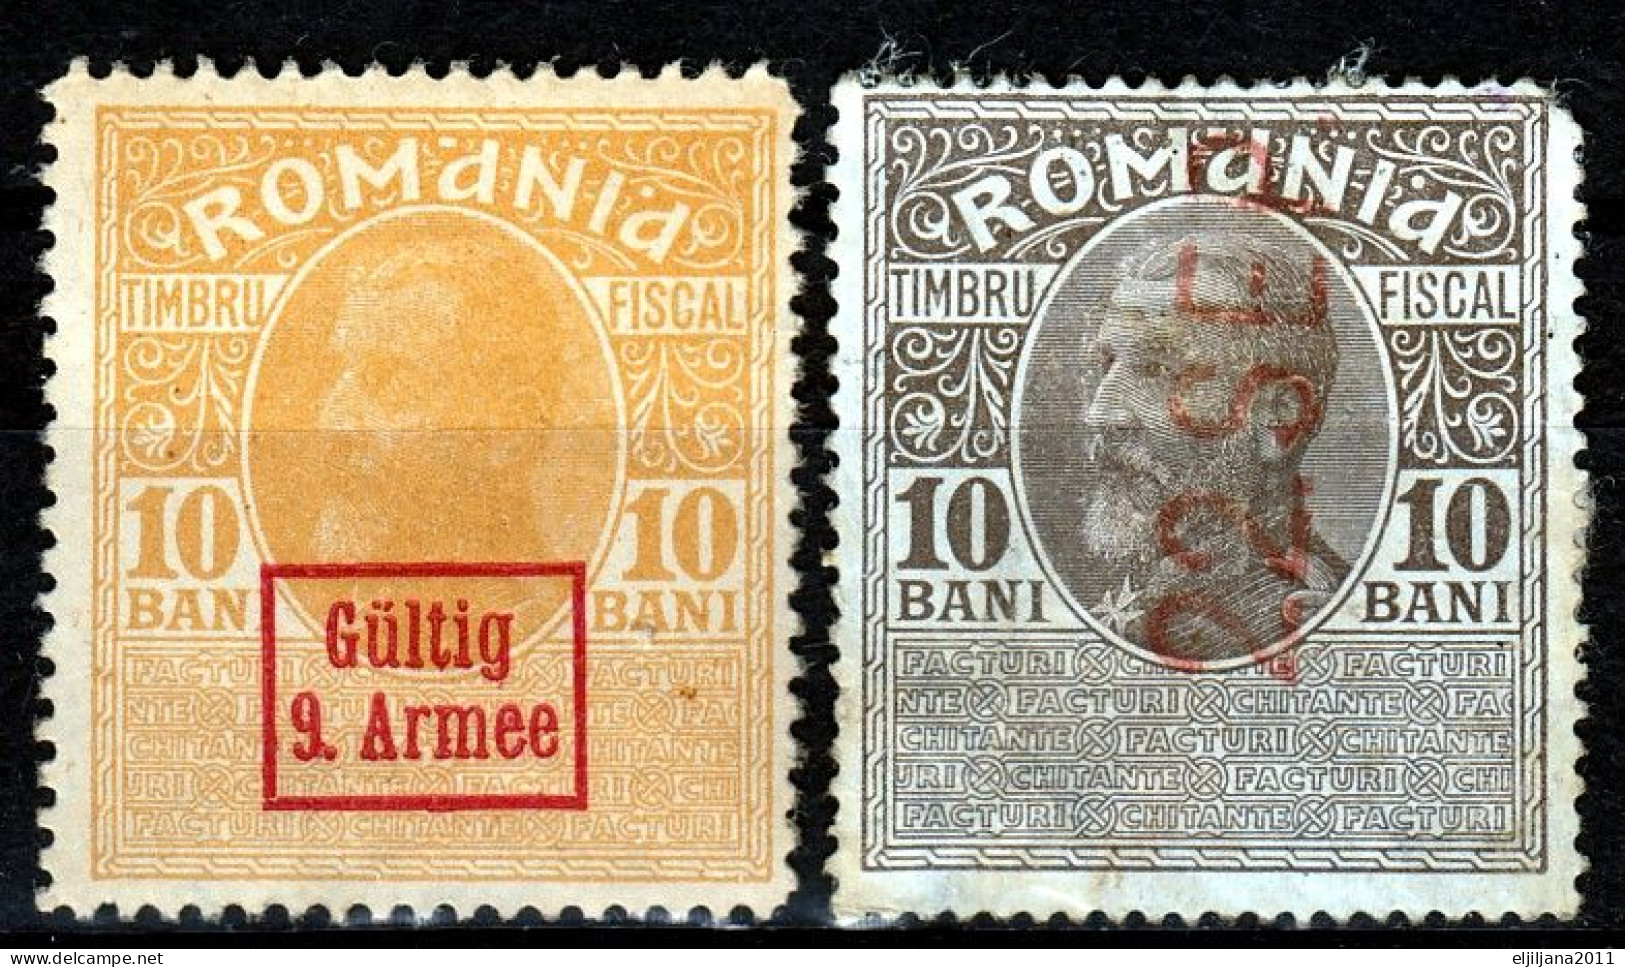 ⁕ Romania 1917 - 1918 Rumänien WWI ⁕ German Occupation "Gültig 9. Armee" Revenue Fiscal Tax Timbru 10 Bani ⁕ 2v MNH & MH - Besetzungen